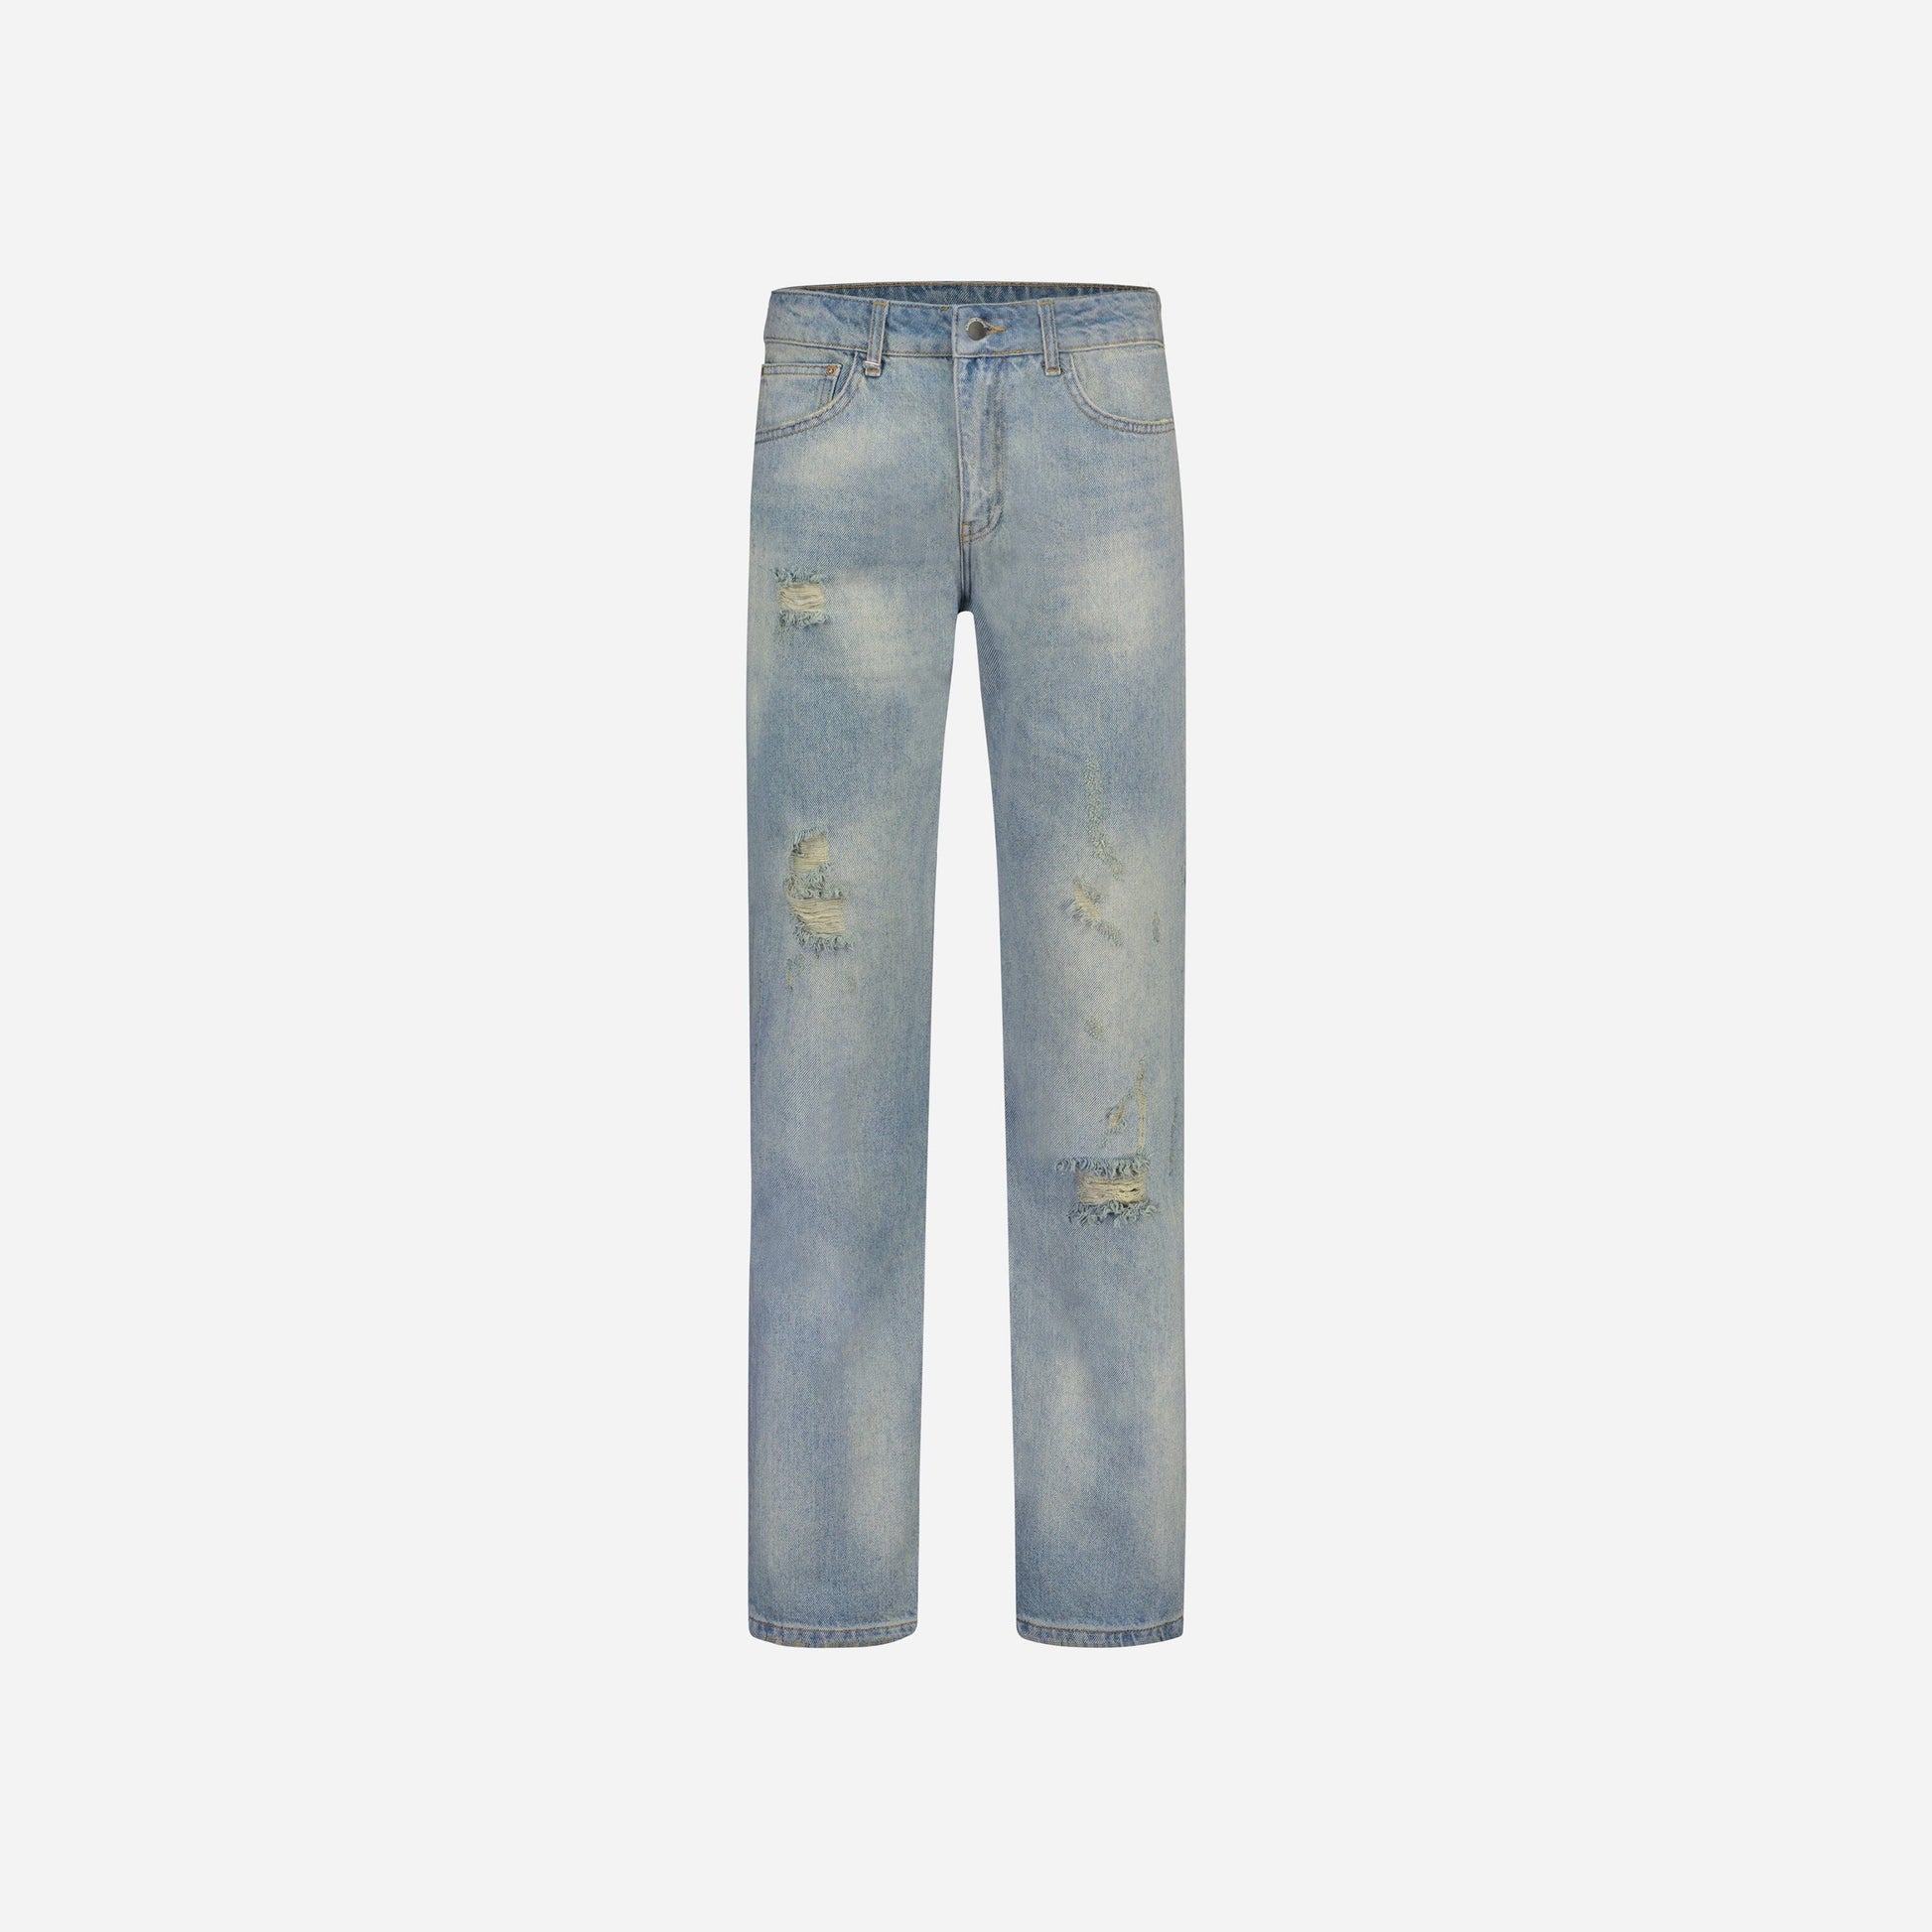 Distressed Straight Jeans in Light Blue Denim